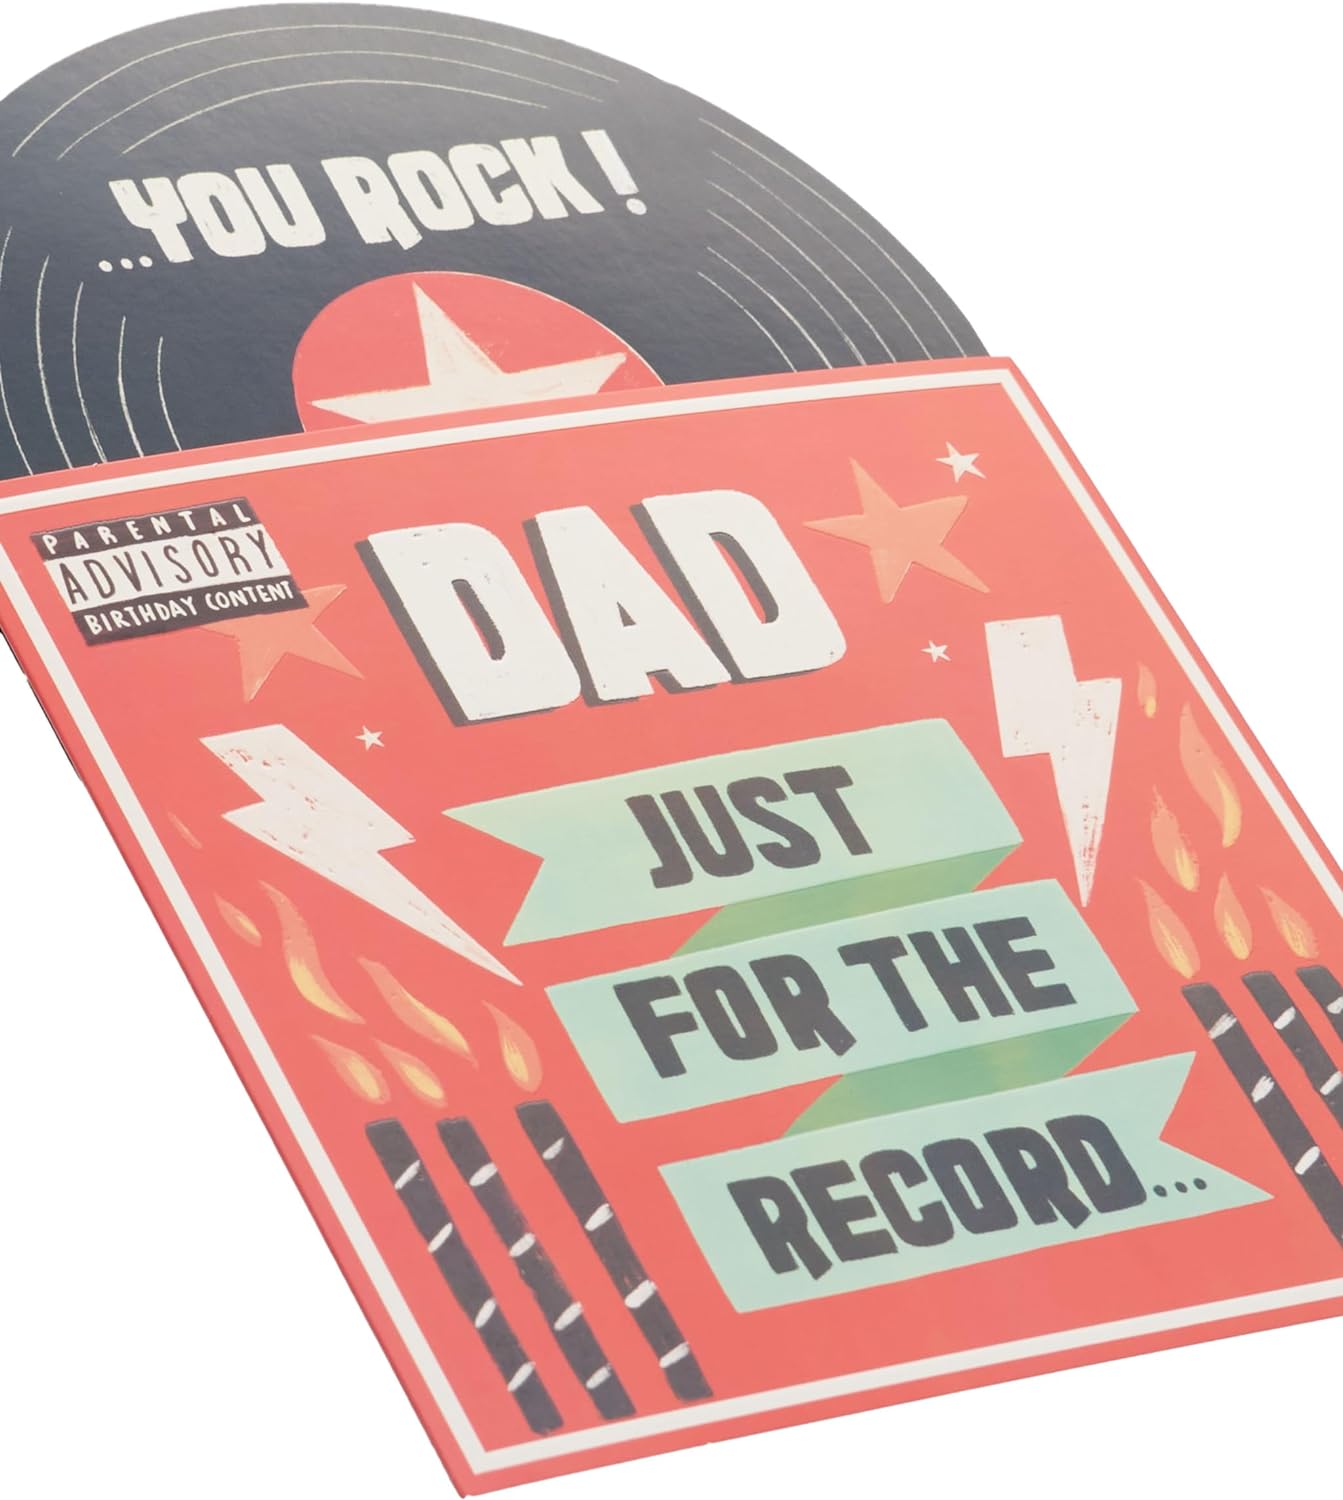 Pop-Up Vinyl Record Design Dad Birthday Card 